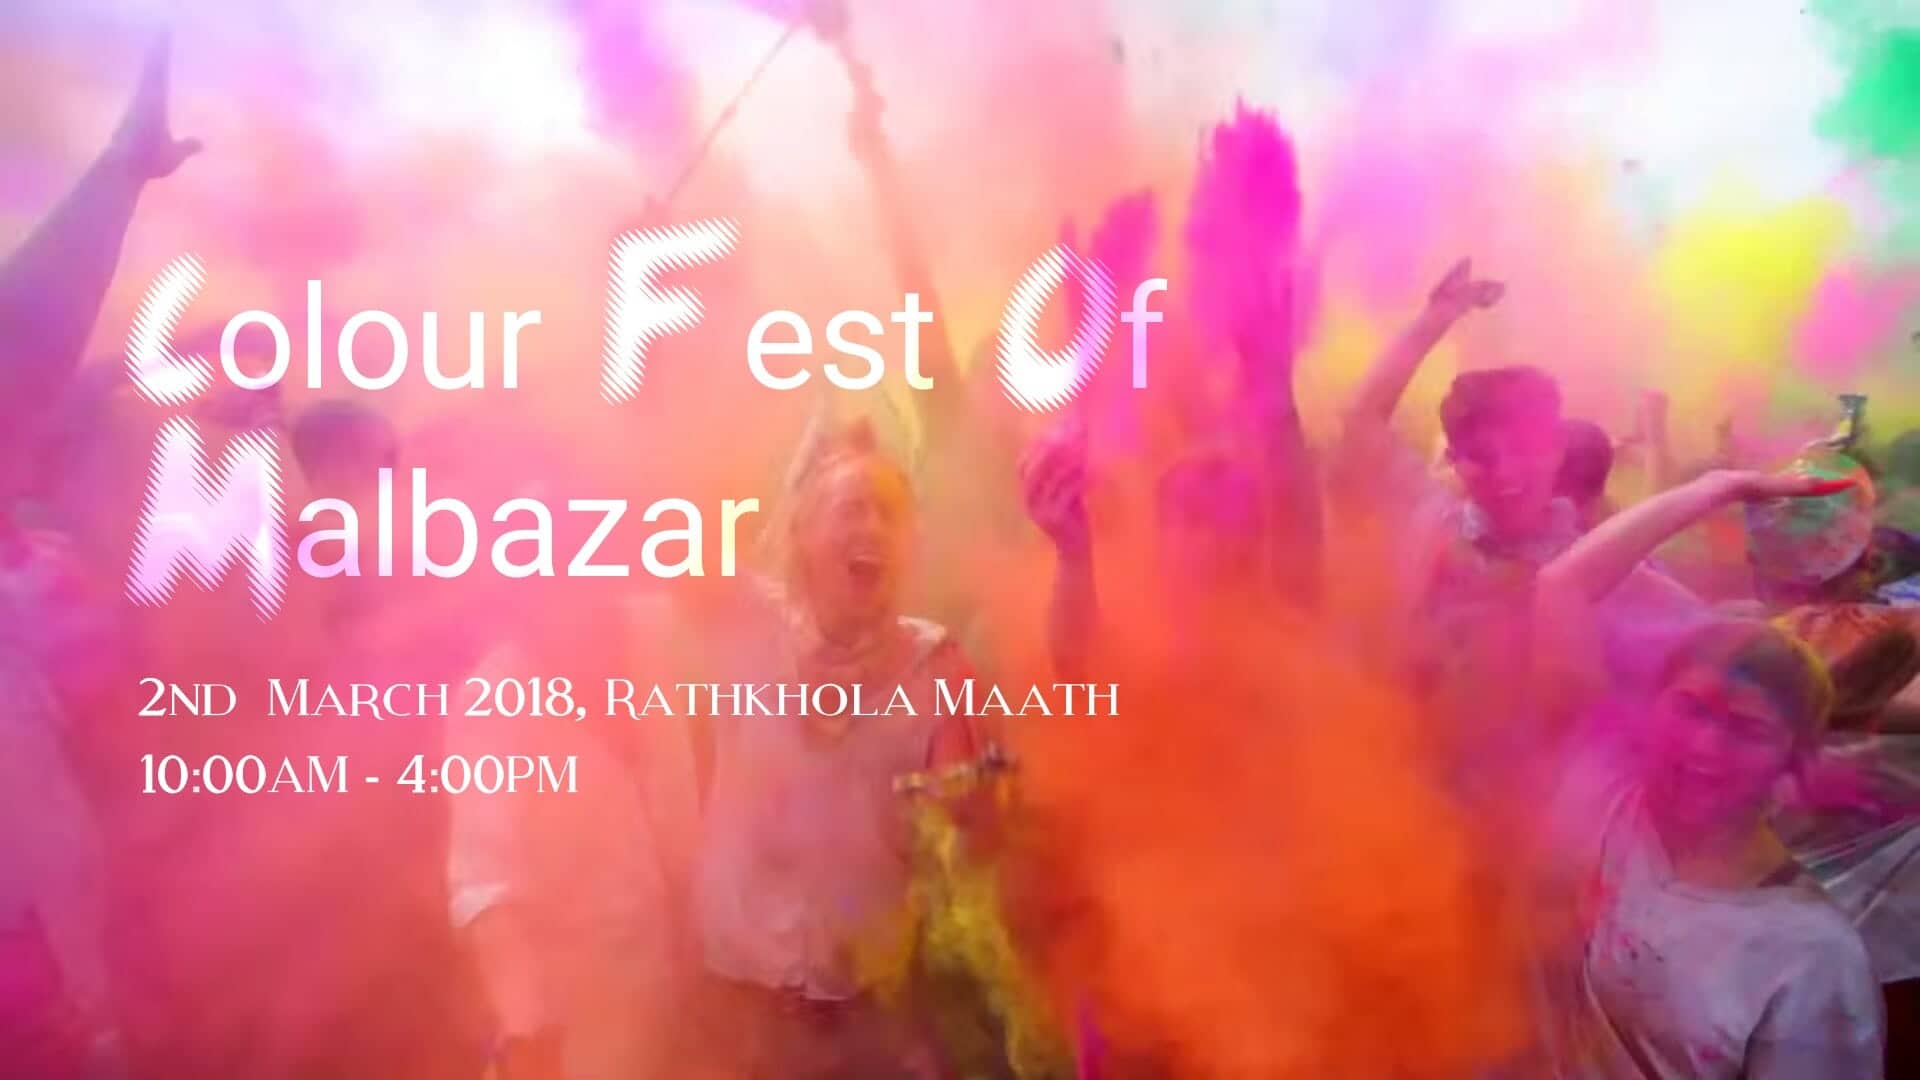 Colour Fest 2018 Malbazar